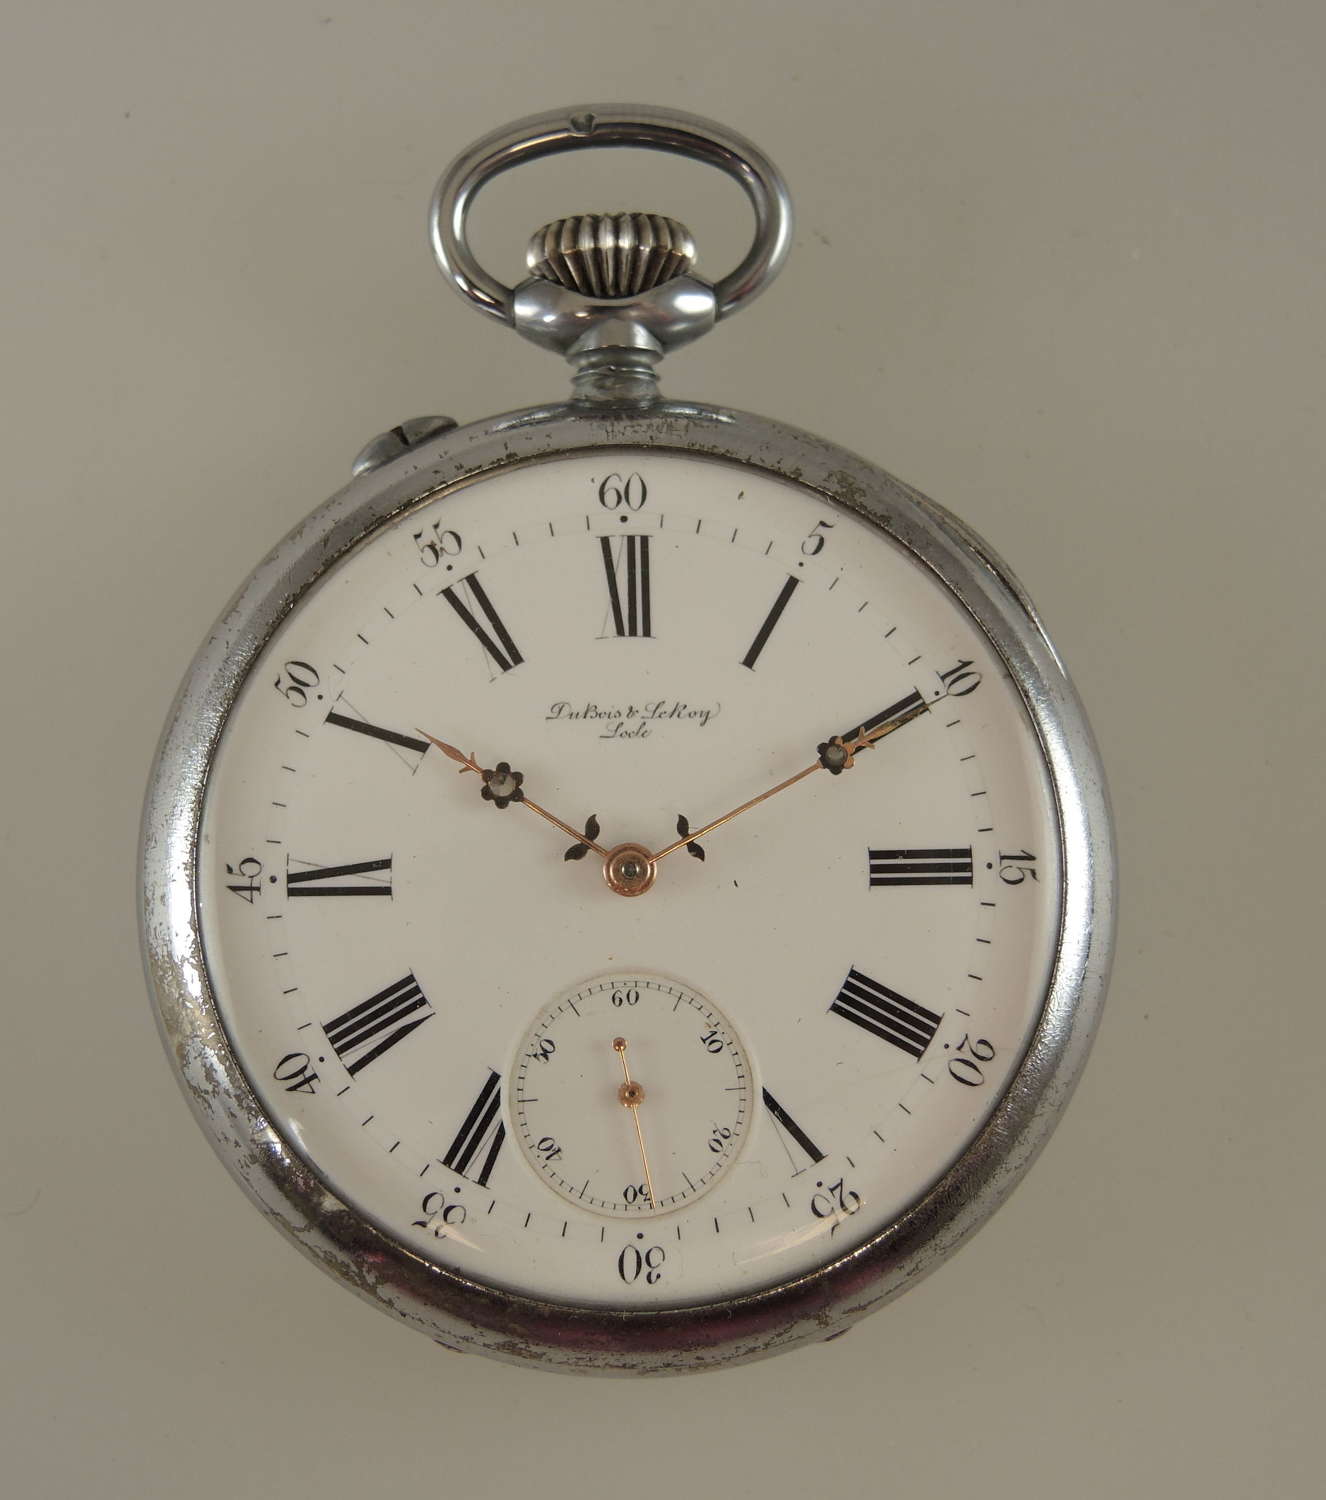 Detent chronometer pocket watch by DuBois & LeRoy c1890